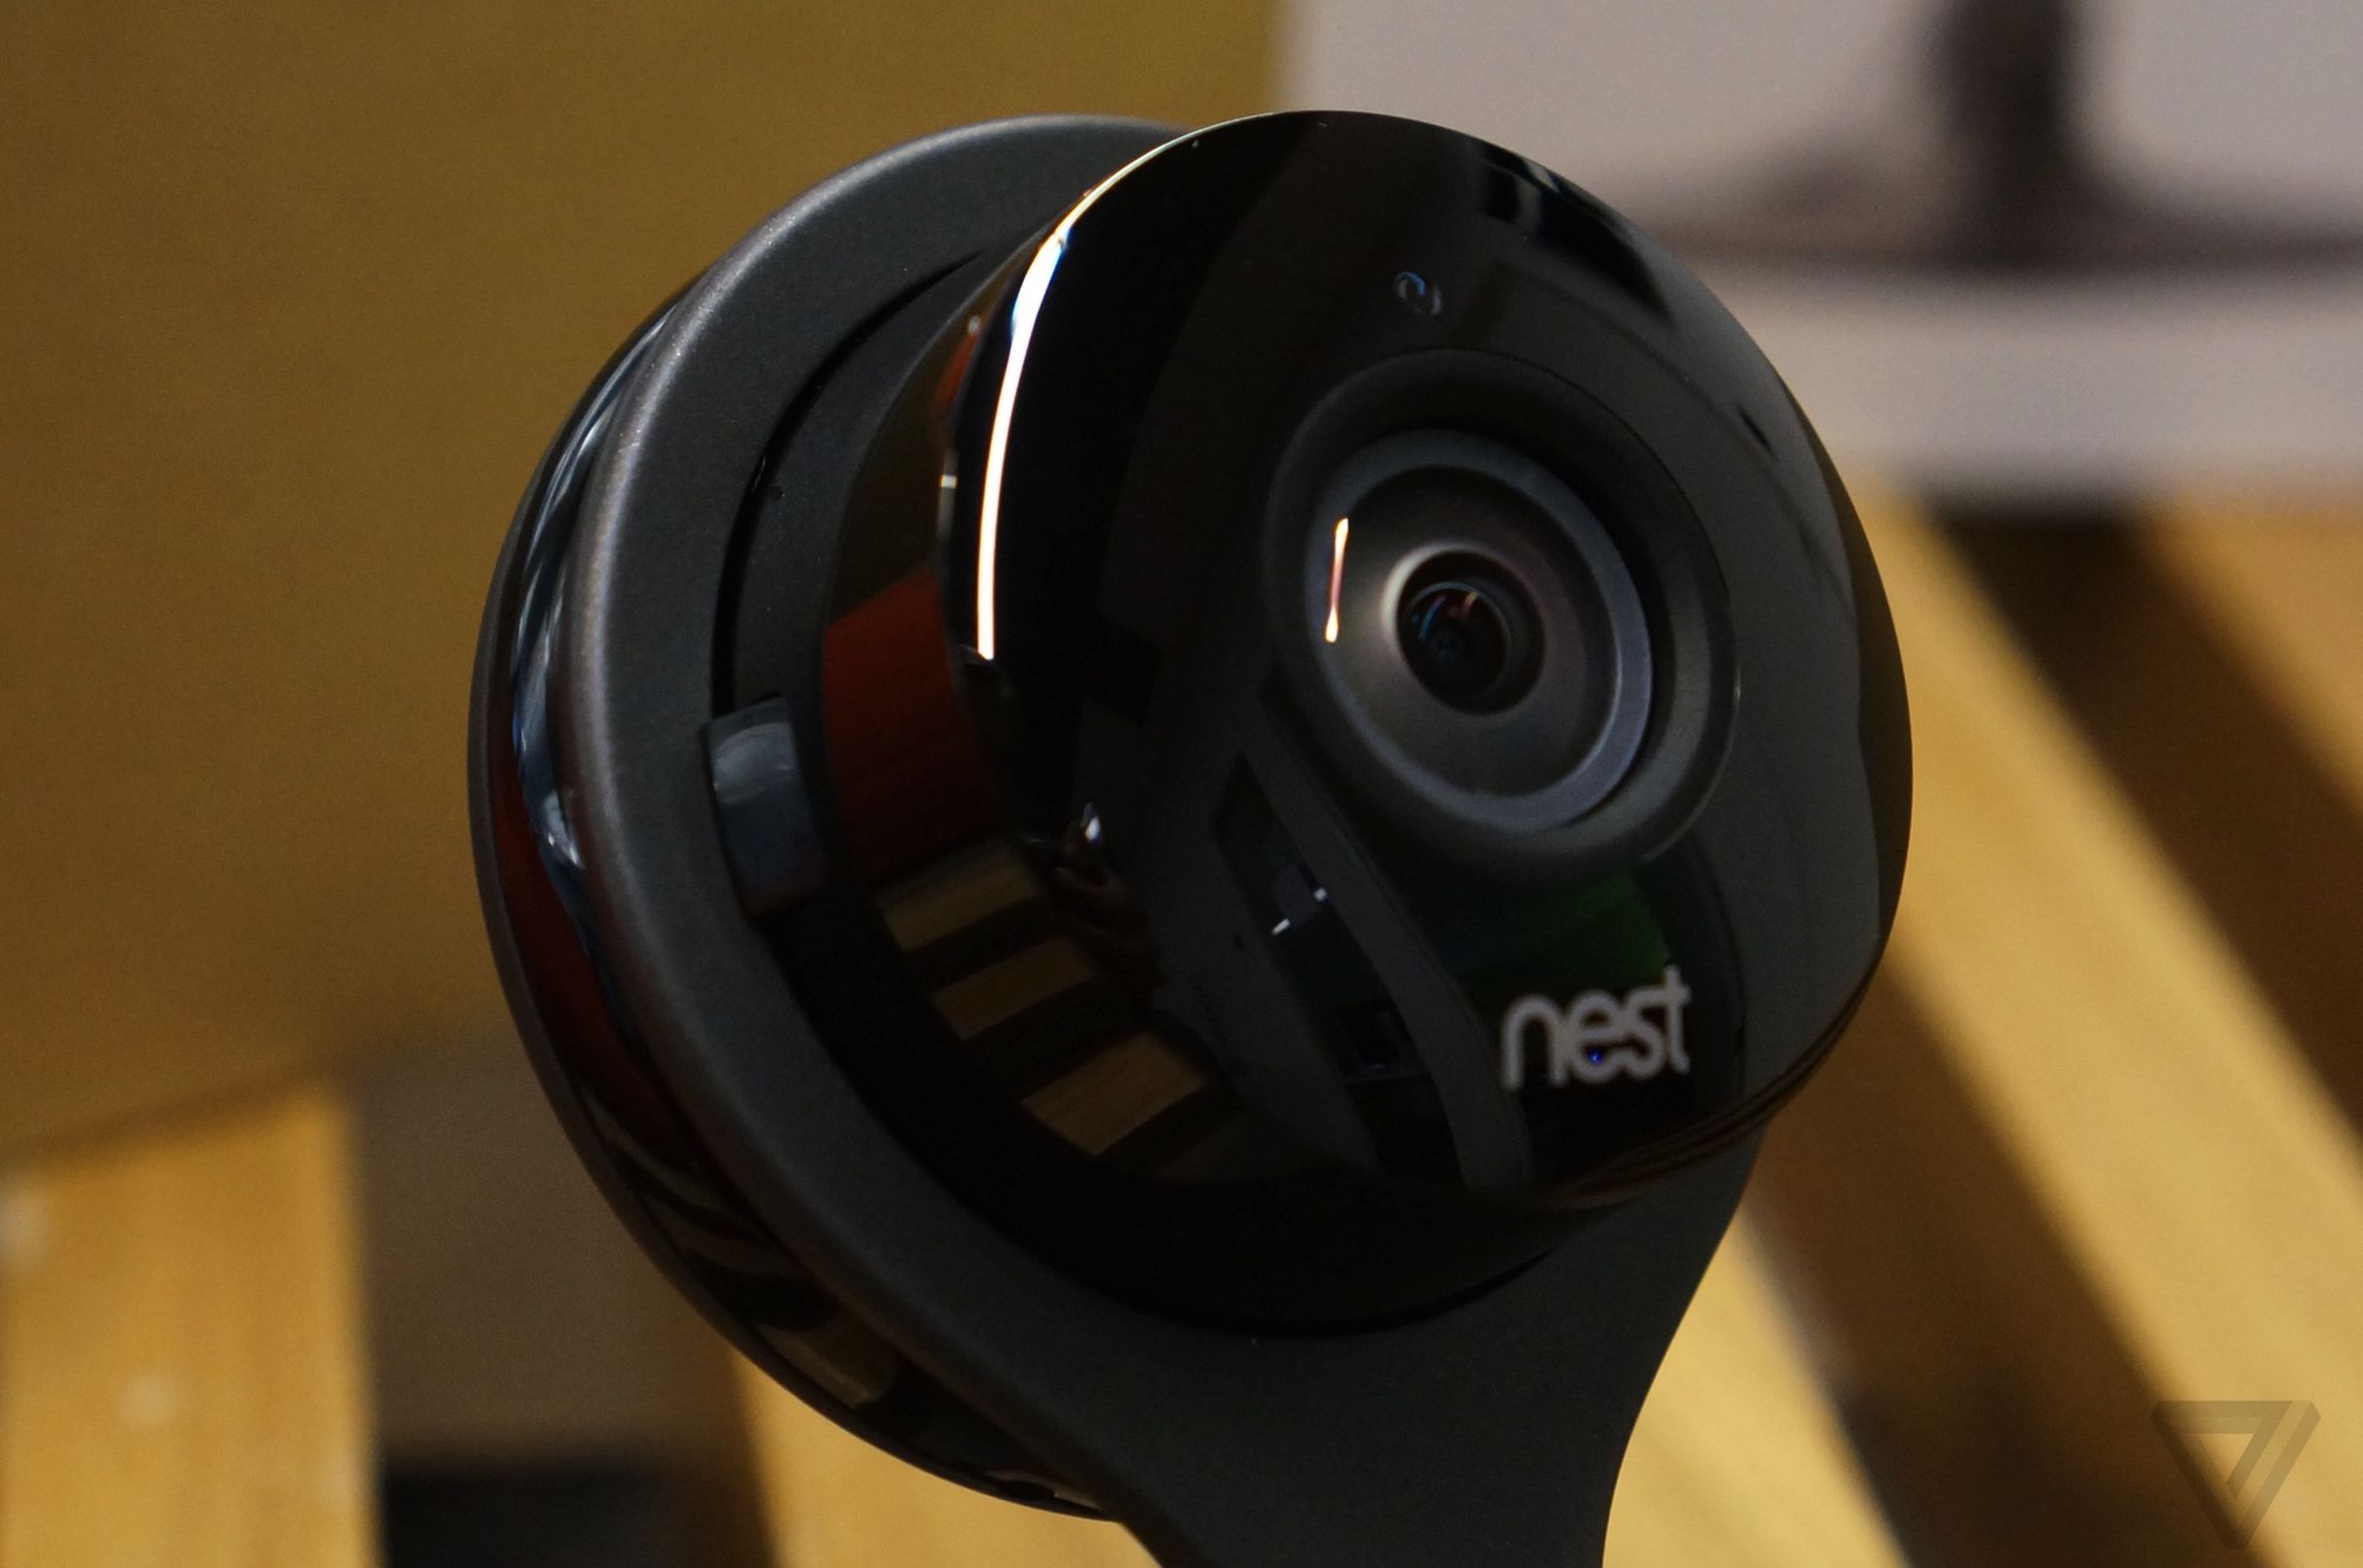 Nest Cam hands-on photos